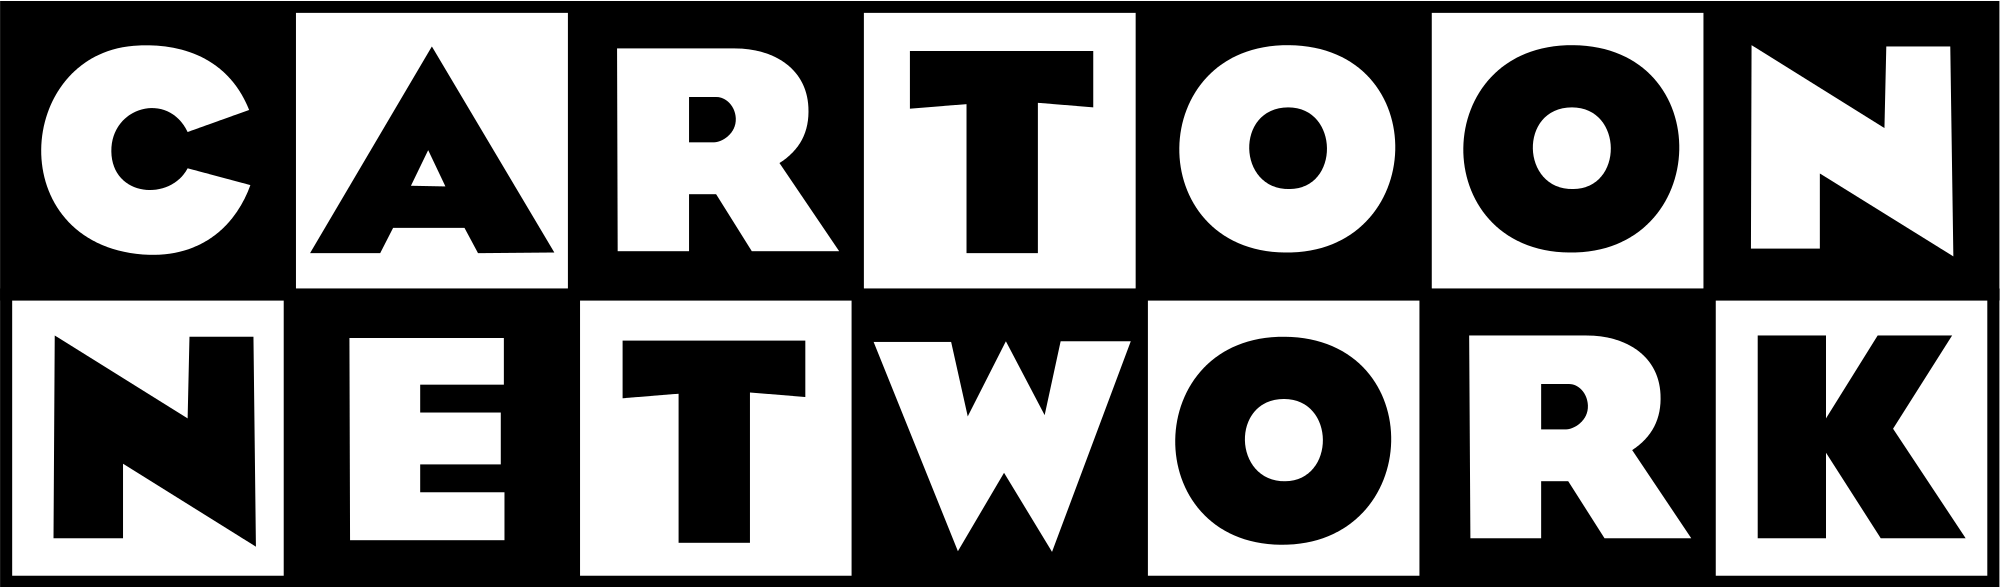 Cartoon Network 1992 Logo - File:Cartoon Network 1992 logo.svg - Wikimedia Commons